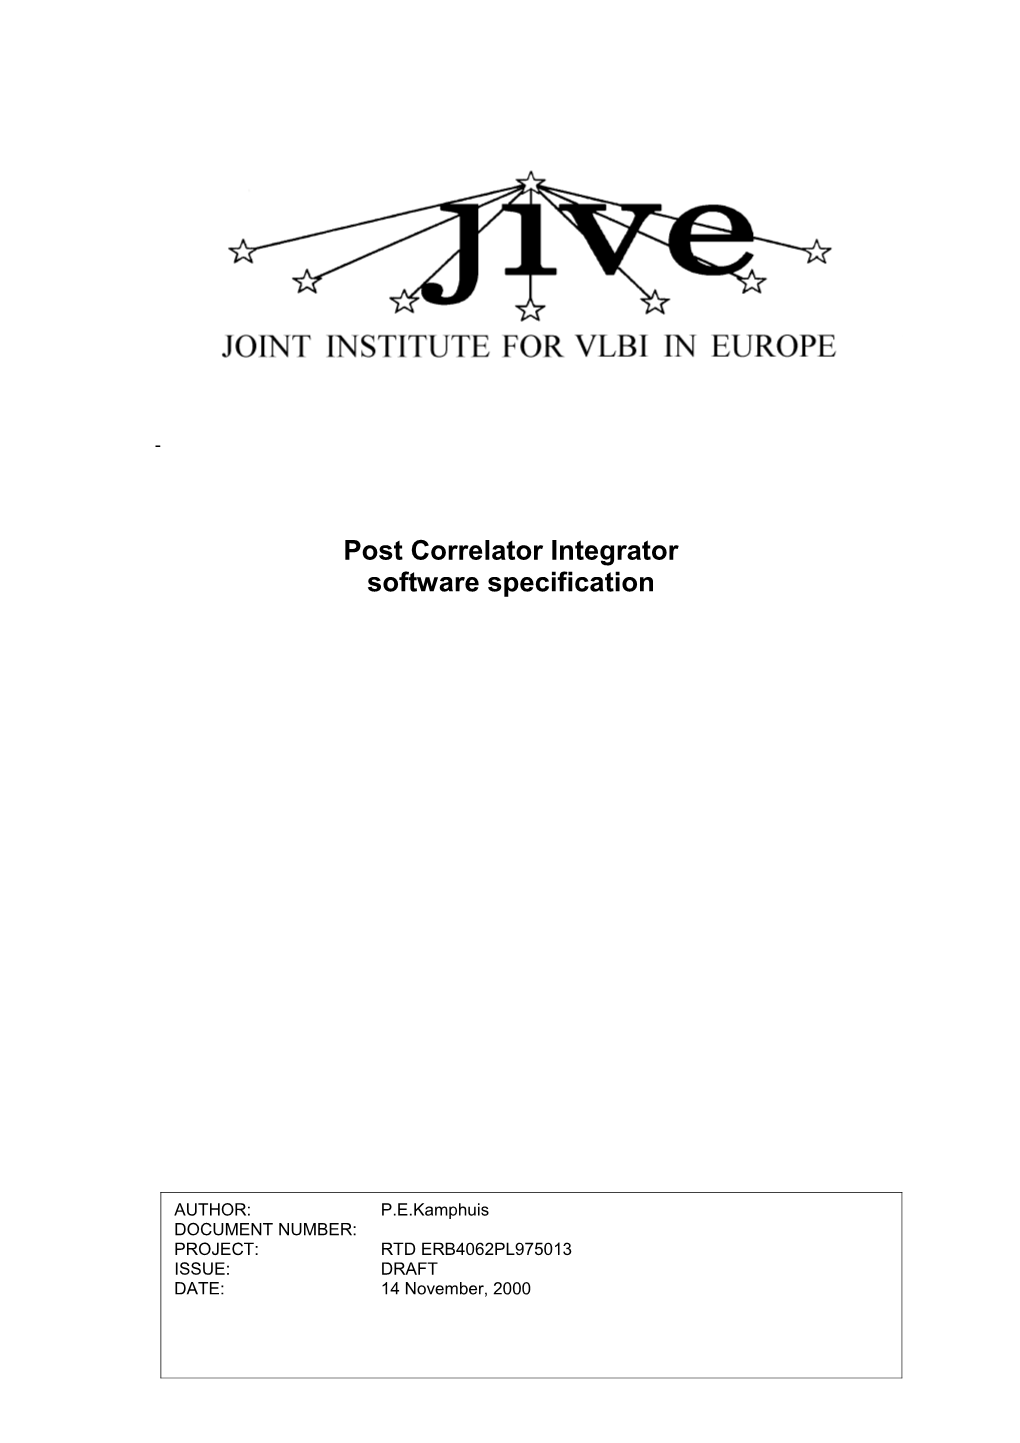 Post Correlator Integrator Software Specification